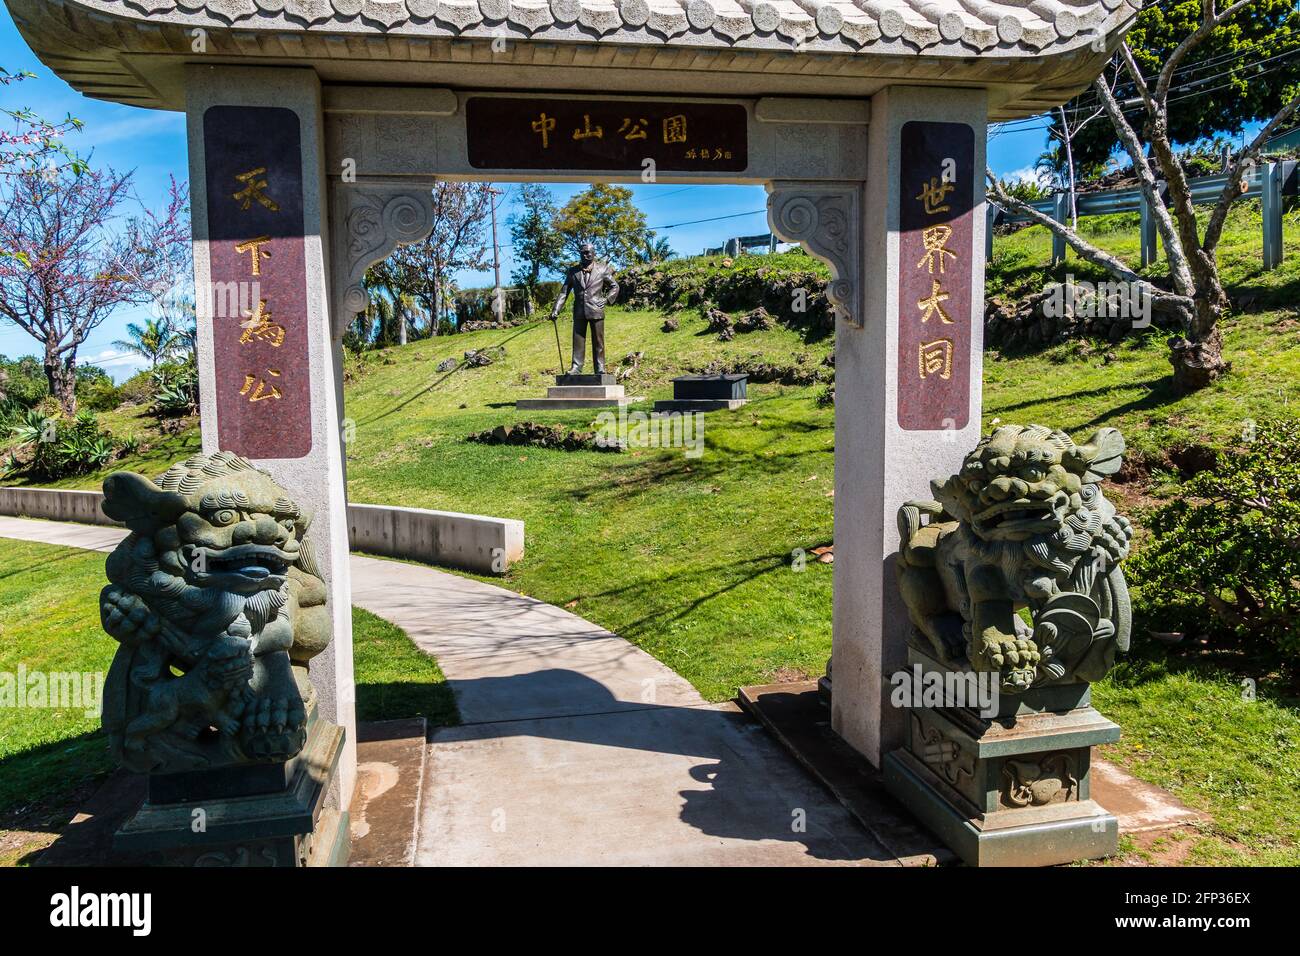 Traditionelle chinesische Drachenskulpturen bewachen das Tor zum Sun Yat Sen Memorial Park, Kula, Maui, Hawaii, USA Stockfoto